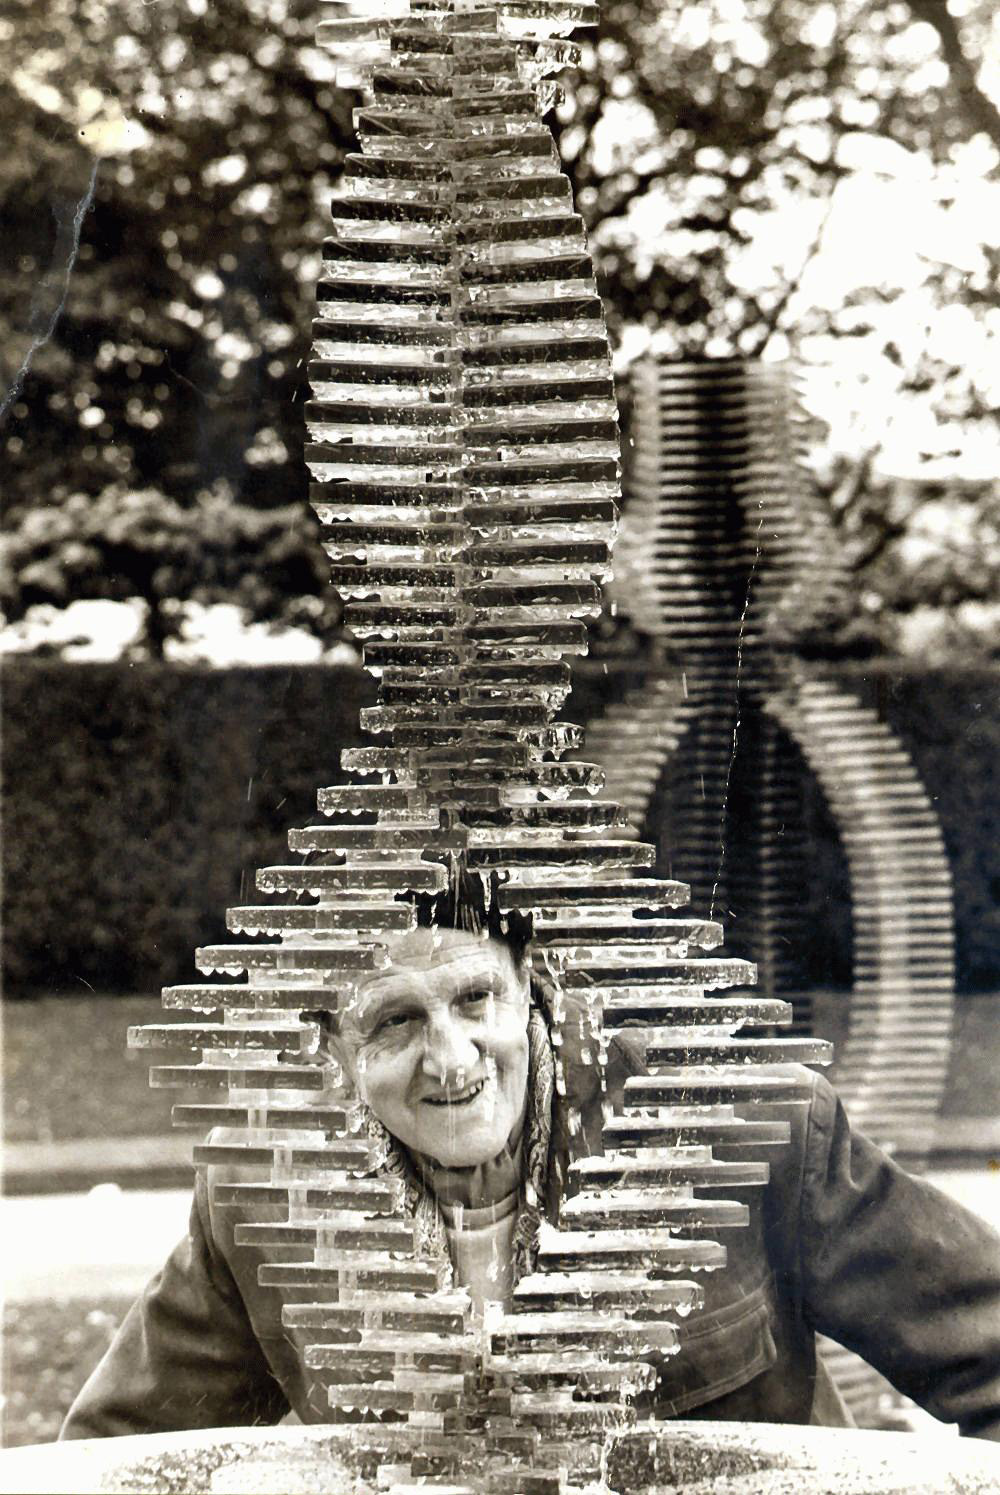 Exhibition of Arthur Fleischmann’s Water Sculptures in the Victoria Embankment Gardens, Westminster Fetival 1973.